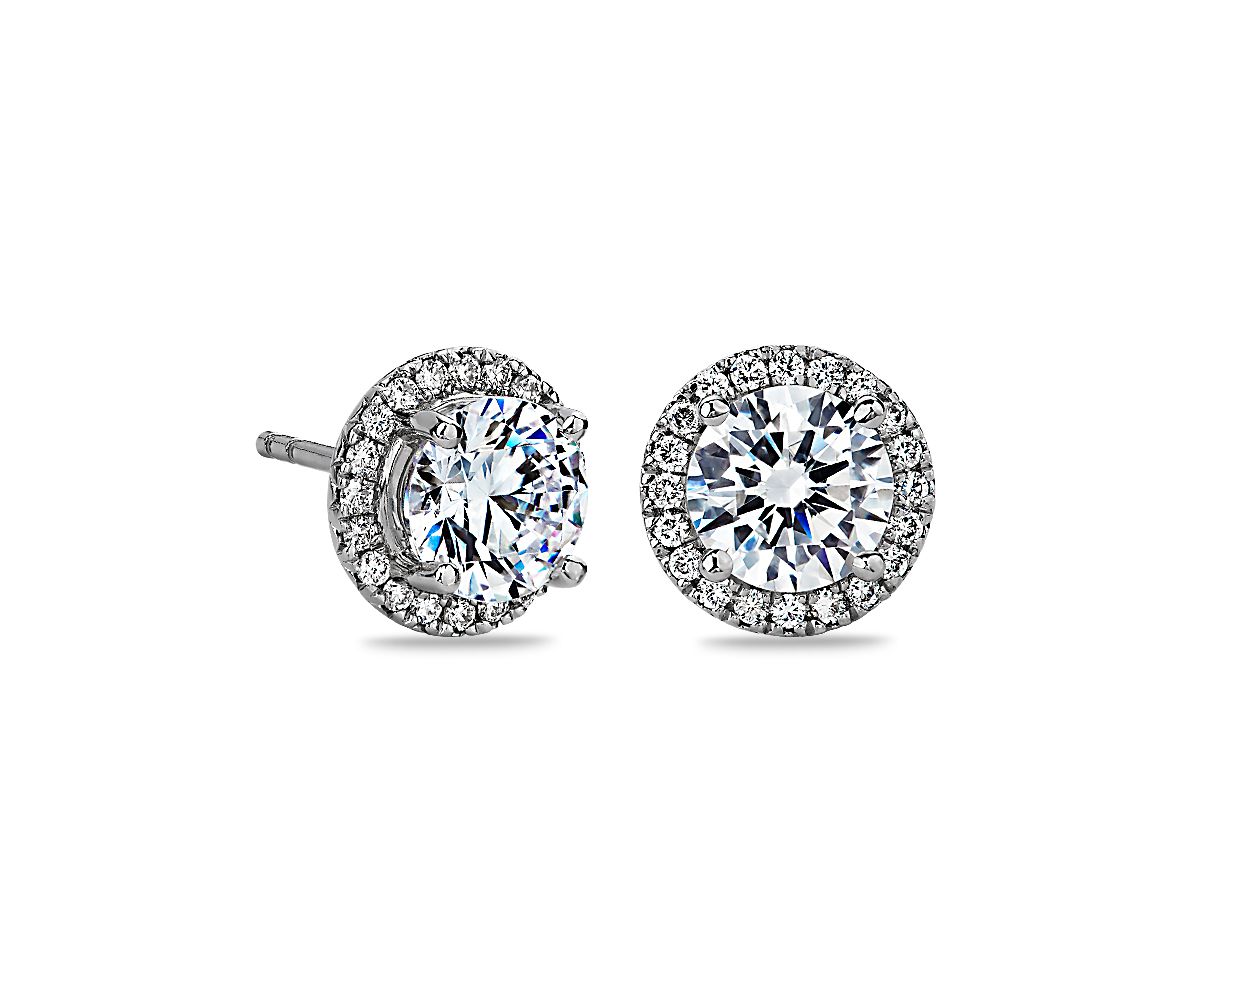 Victoria platinum earrings Tiffany & Co Silver in Platinum - 33074317